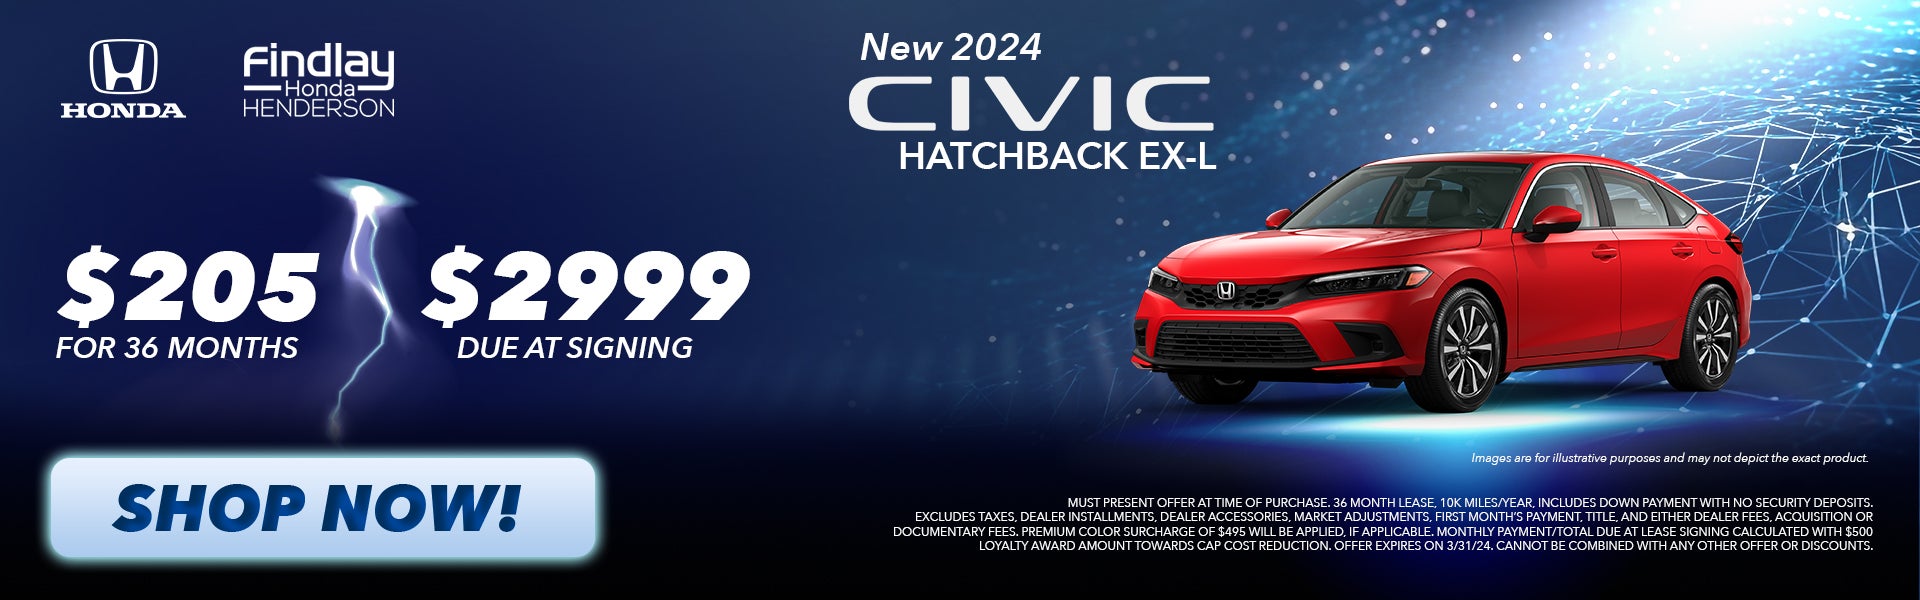 2024 Civic Hathback EX-L